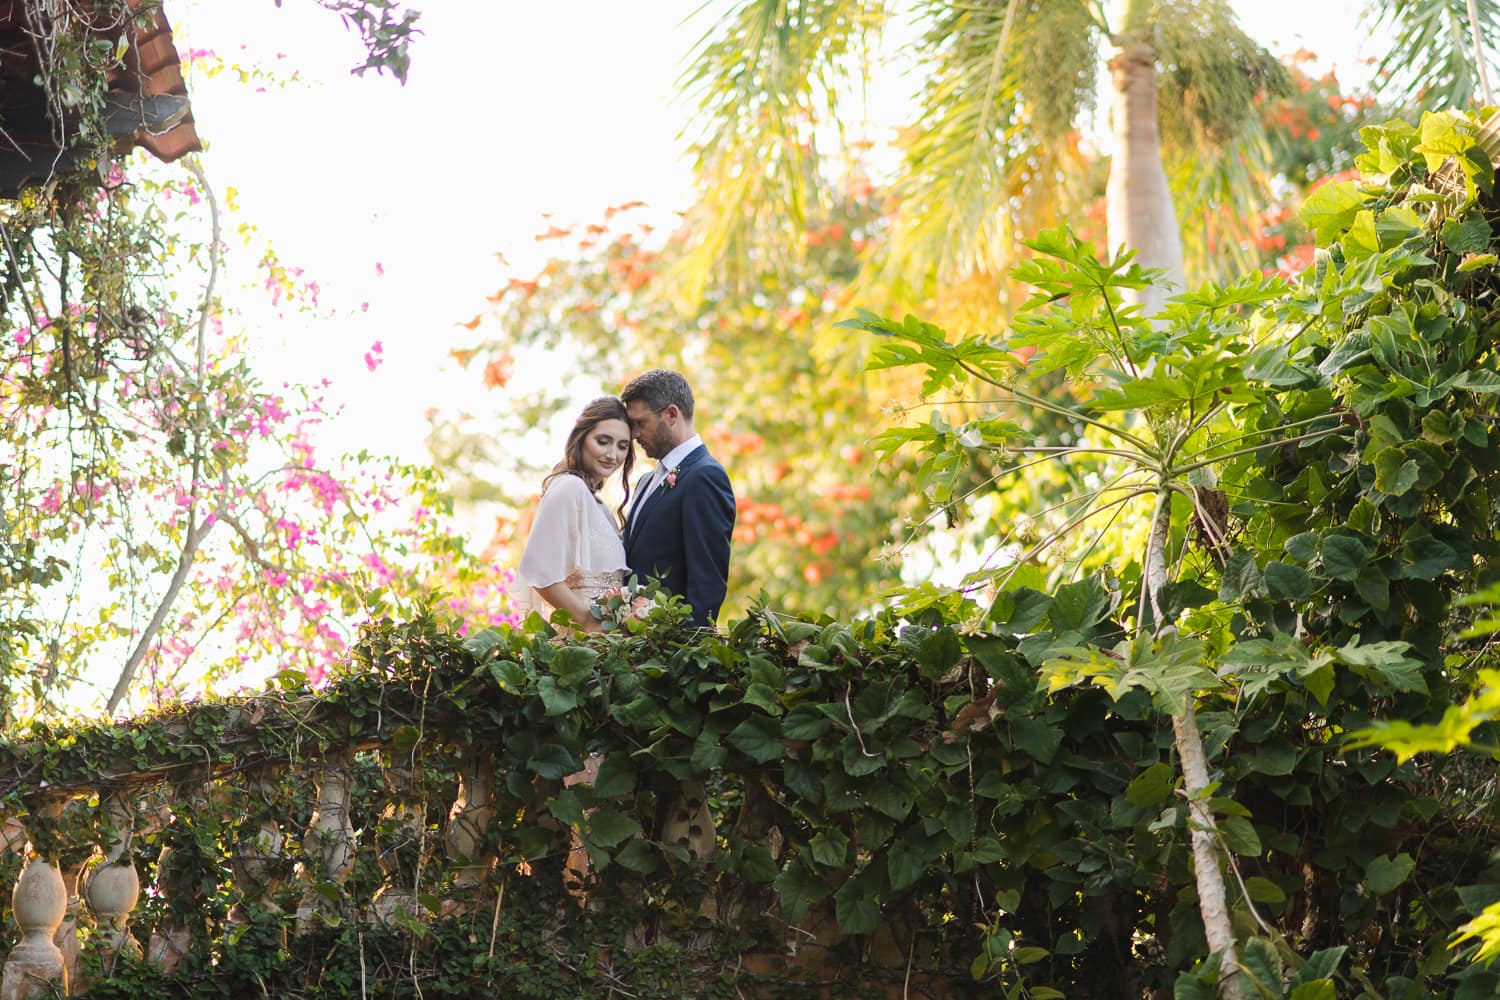 hacienda-siesta-alegre-photos-intimate-relaxed-candid-micro-wedding-photography-puerto-rico-047.jpg